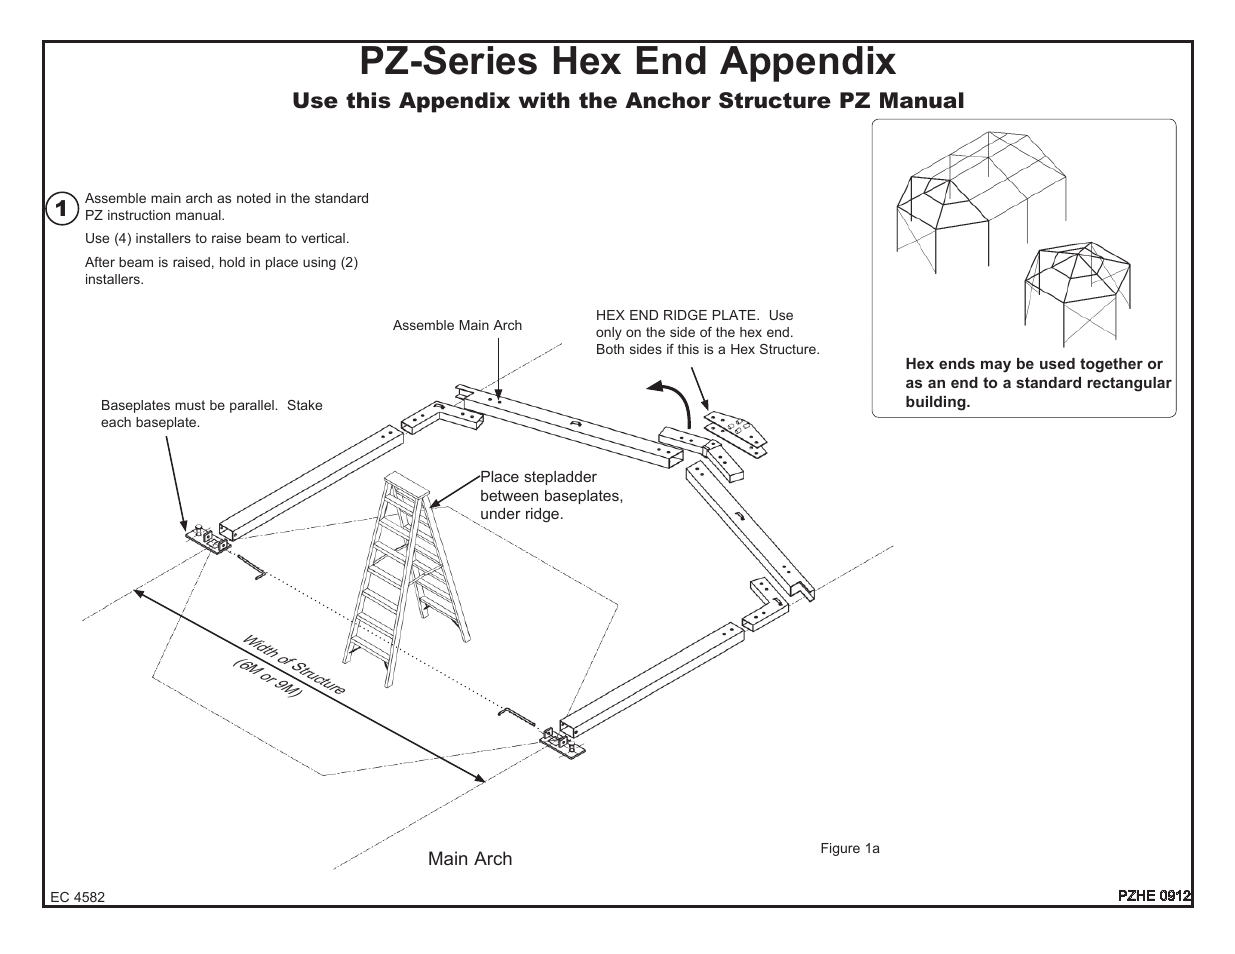 PZ (PARTY) SERIES - PROFILE SIZE: 94MM X 48MM ADDENDUM - HEX END